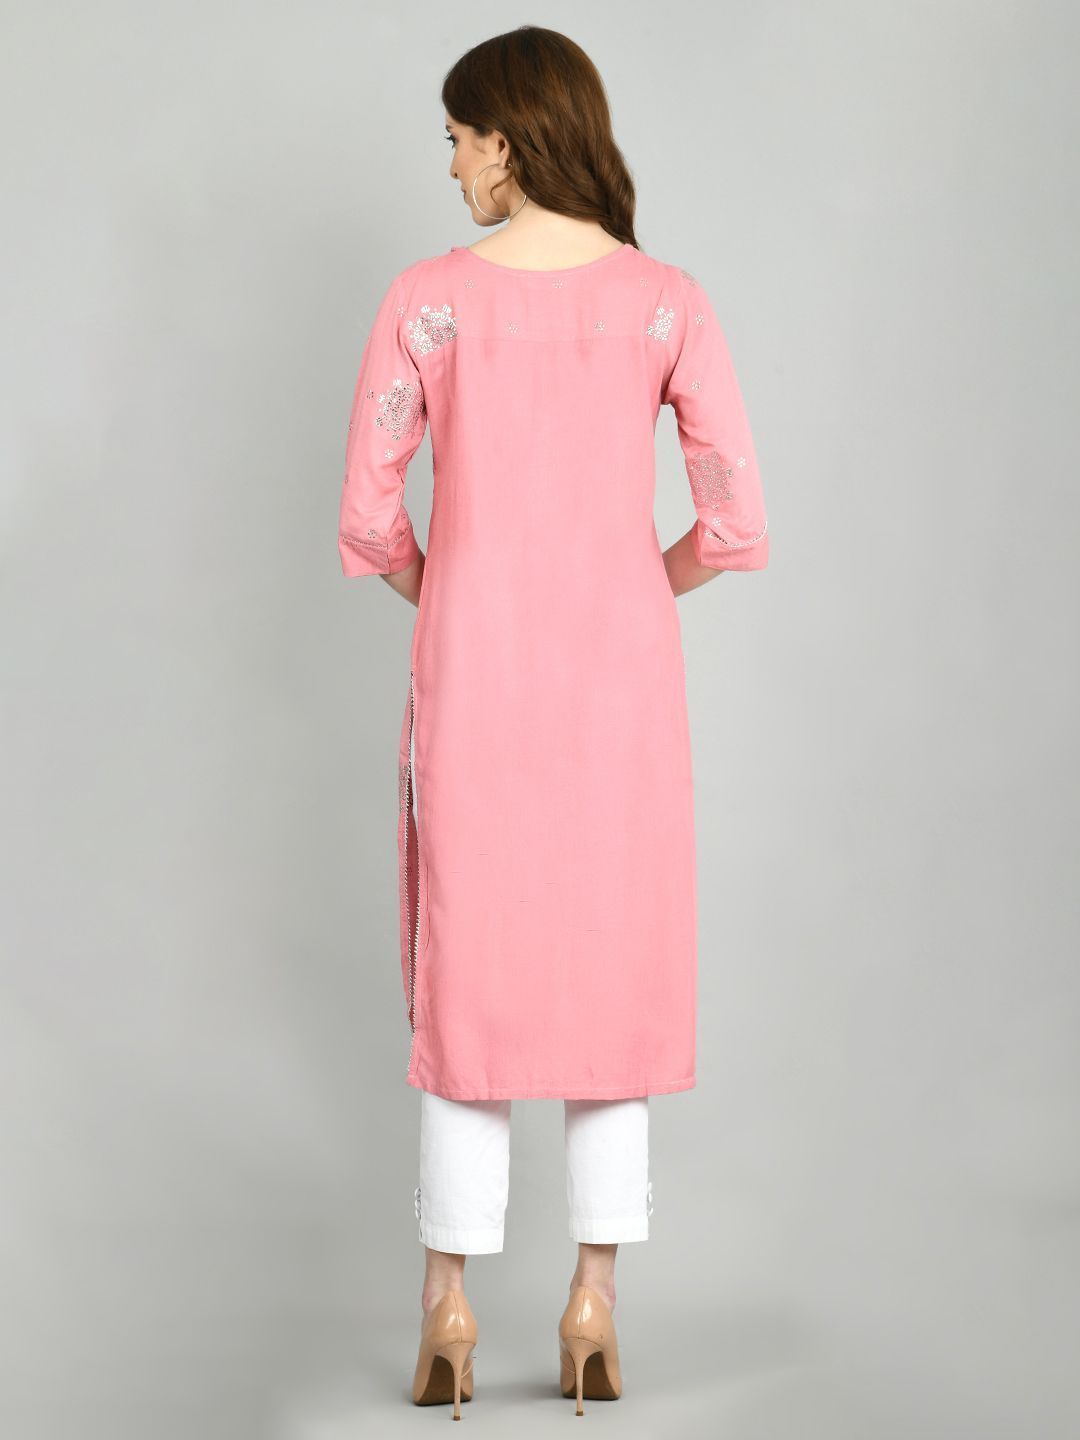 Women's Pink Cotton Printed 3/4 Sleeve Round Neck Casual Kurta Dupatta Set - Myshka